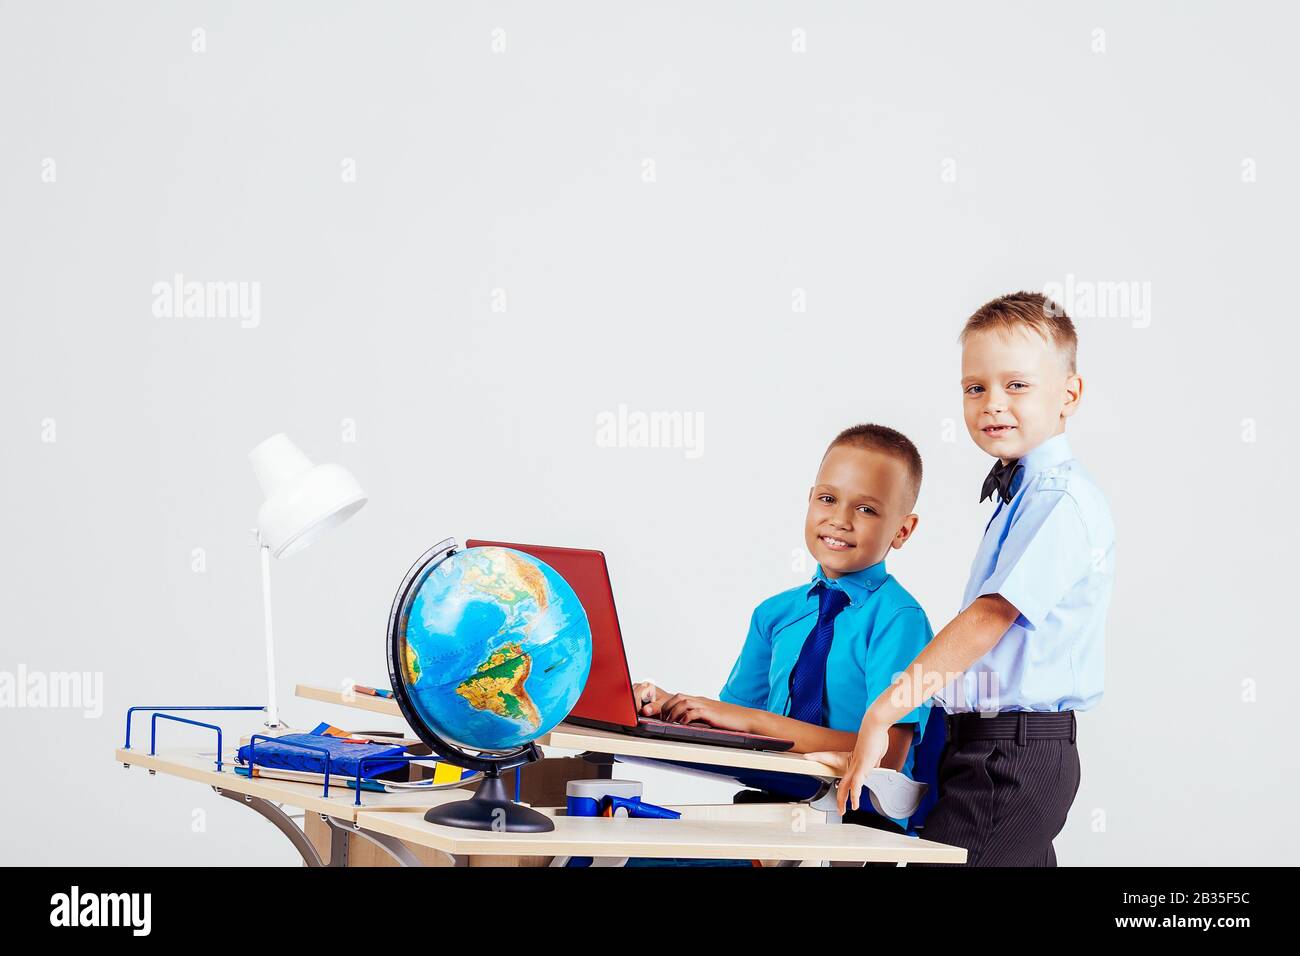 Two Boys School Computer Desk Globe Education Stock Photo